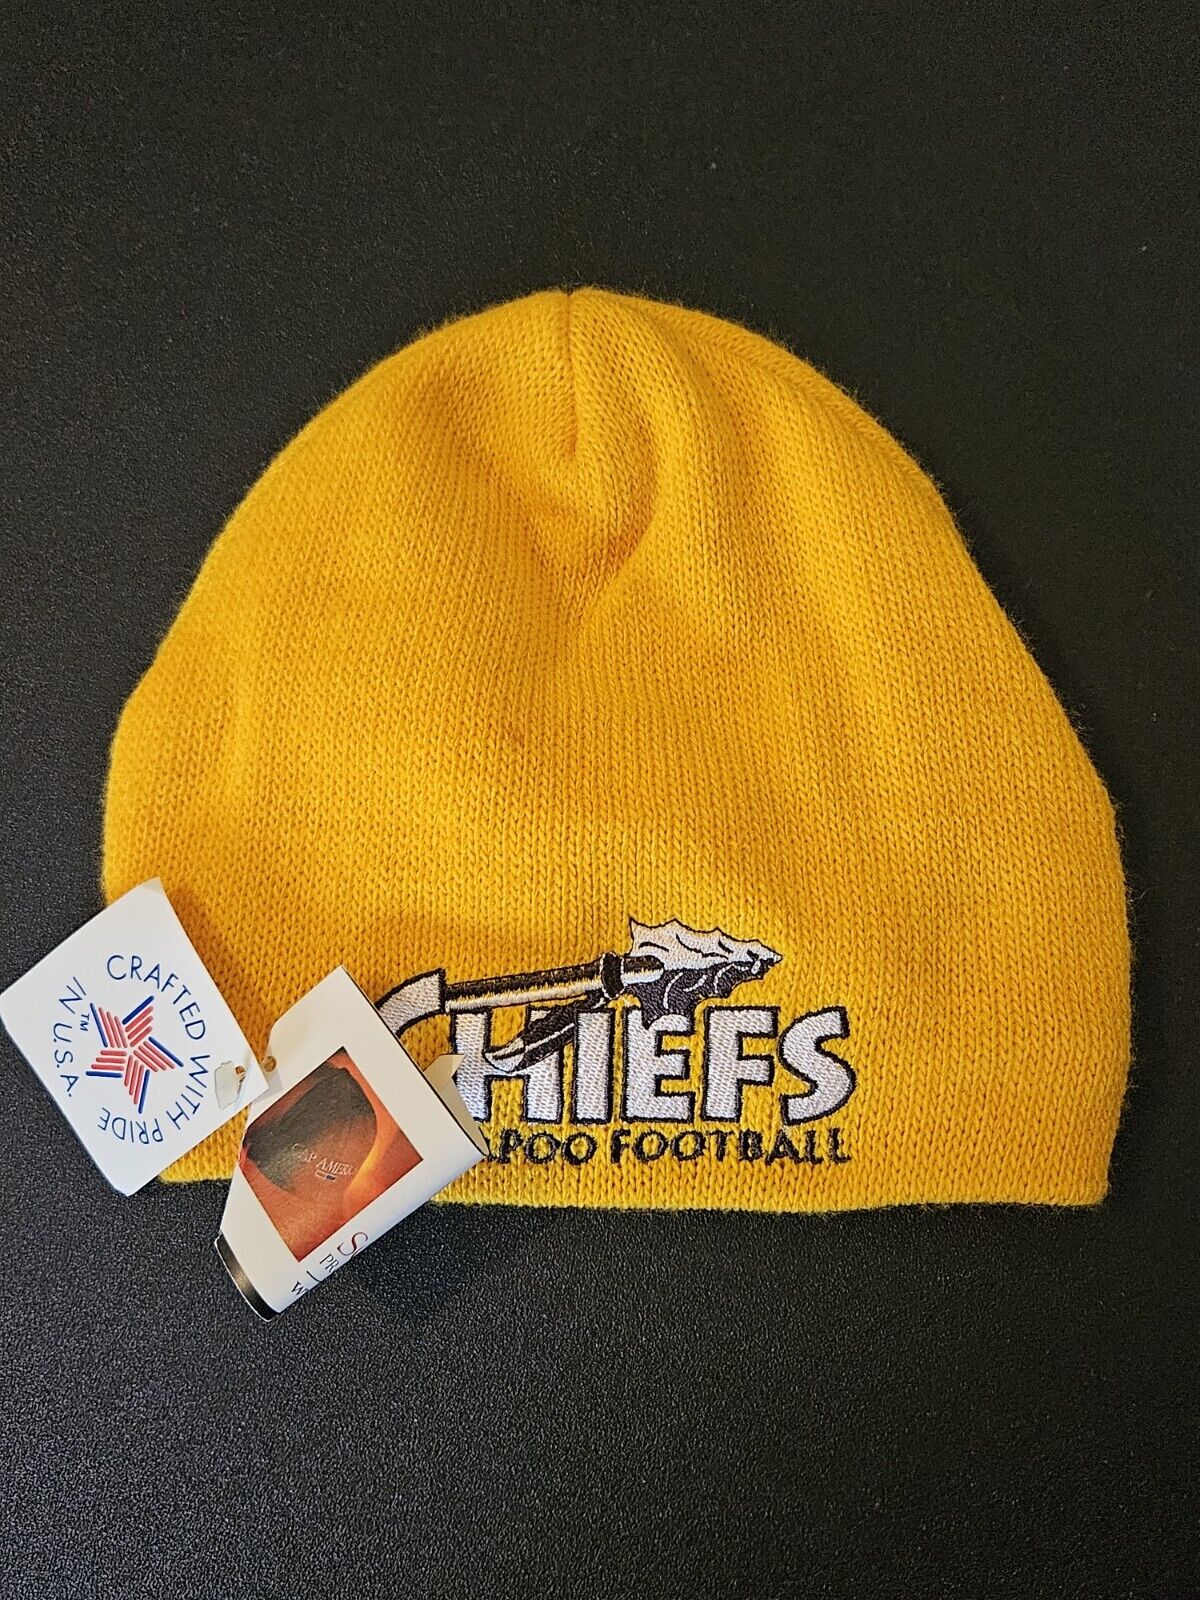 Vintage NOS Chiefs Kickapoo Football Beanie Hat Cap 